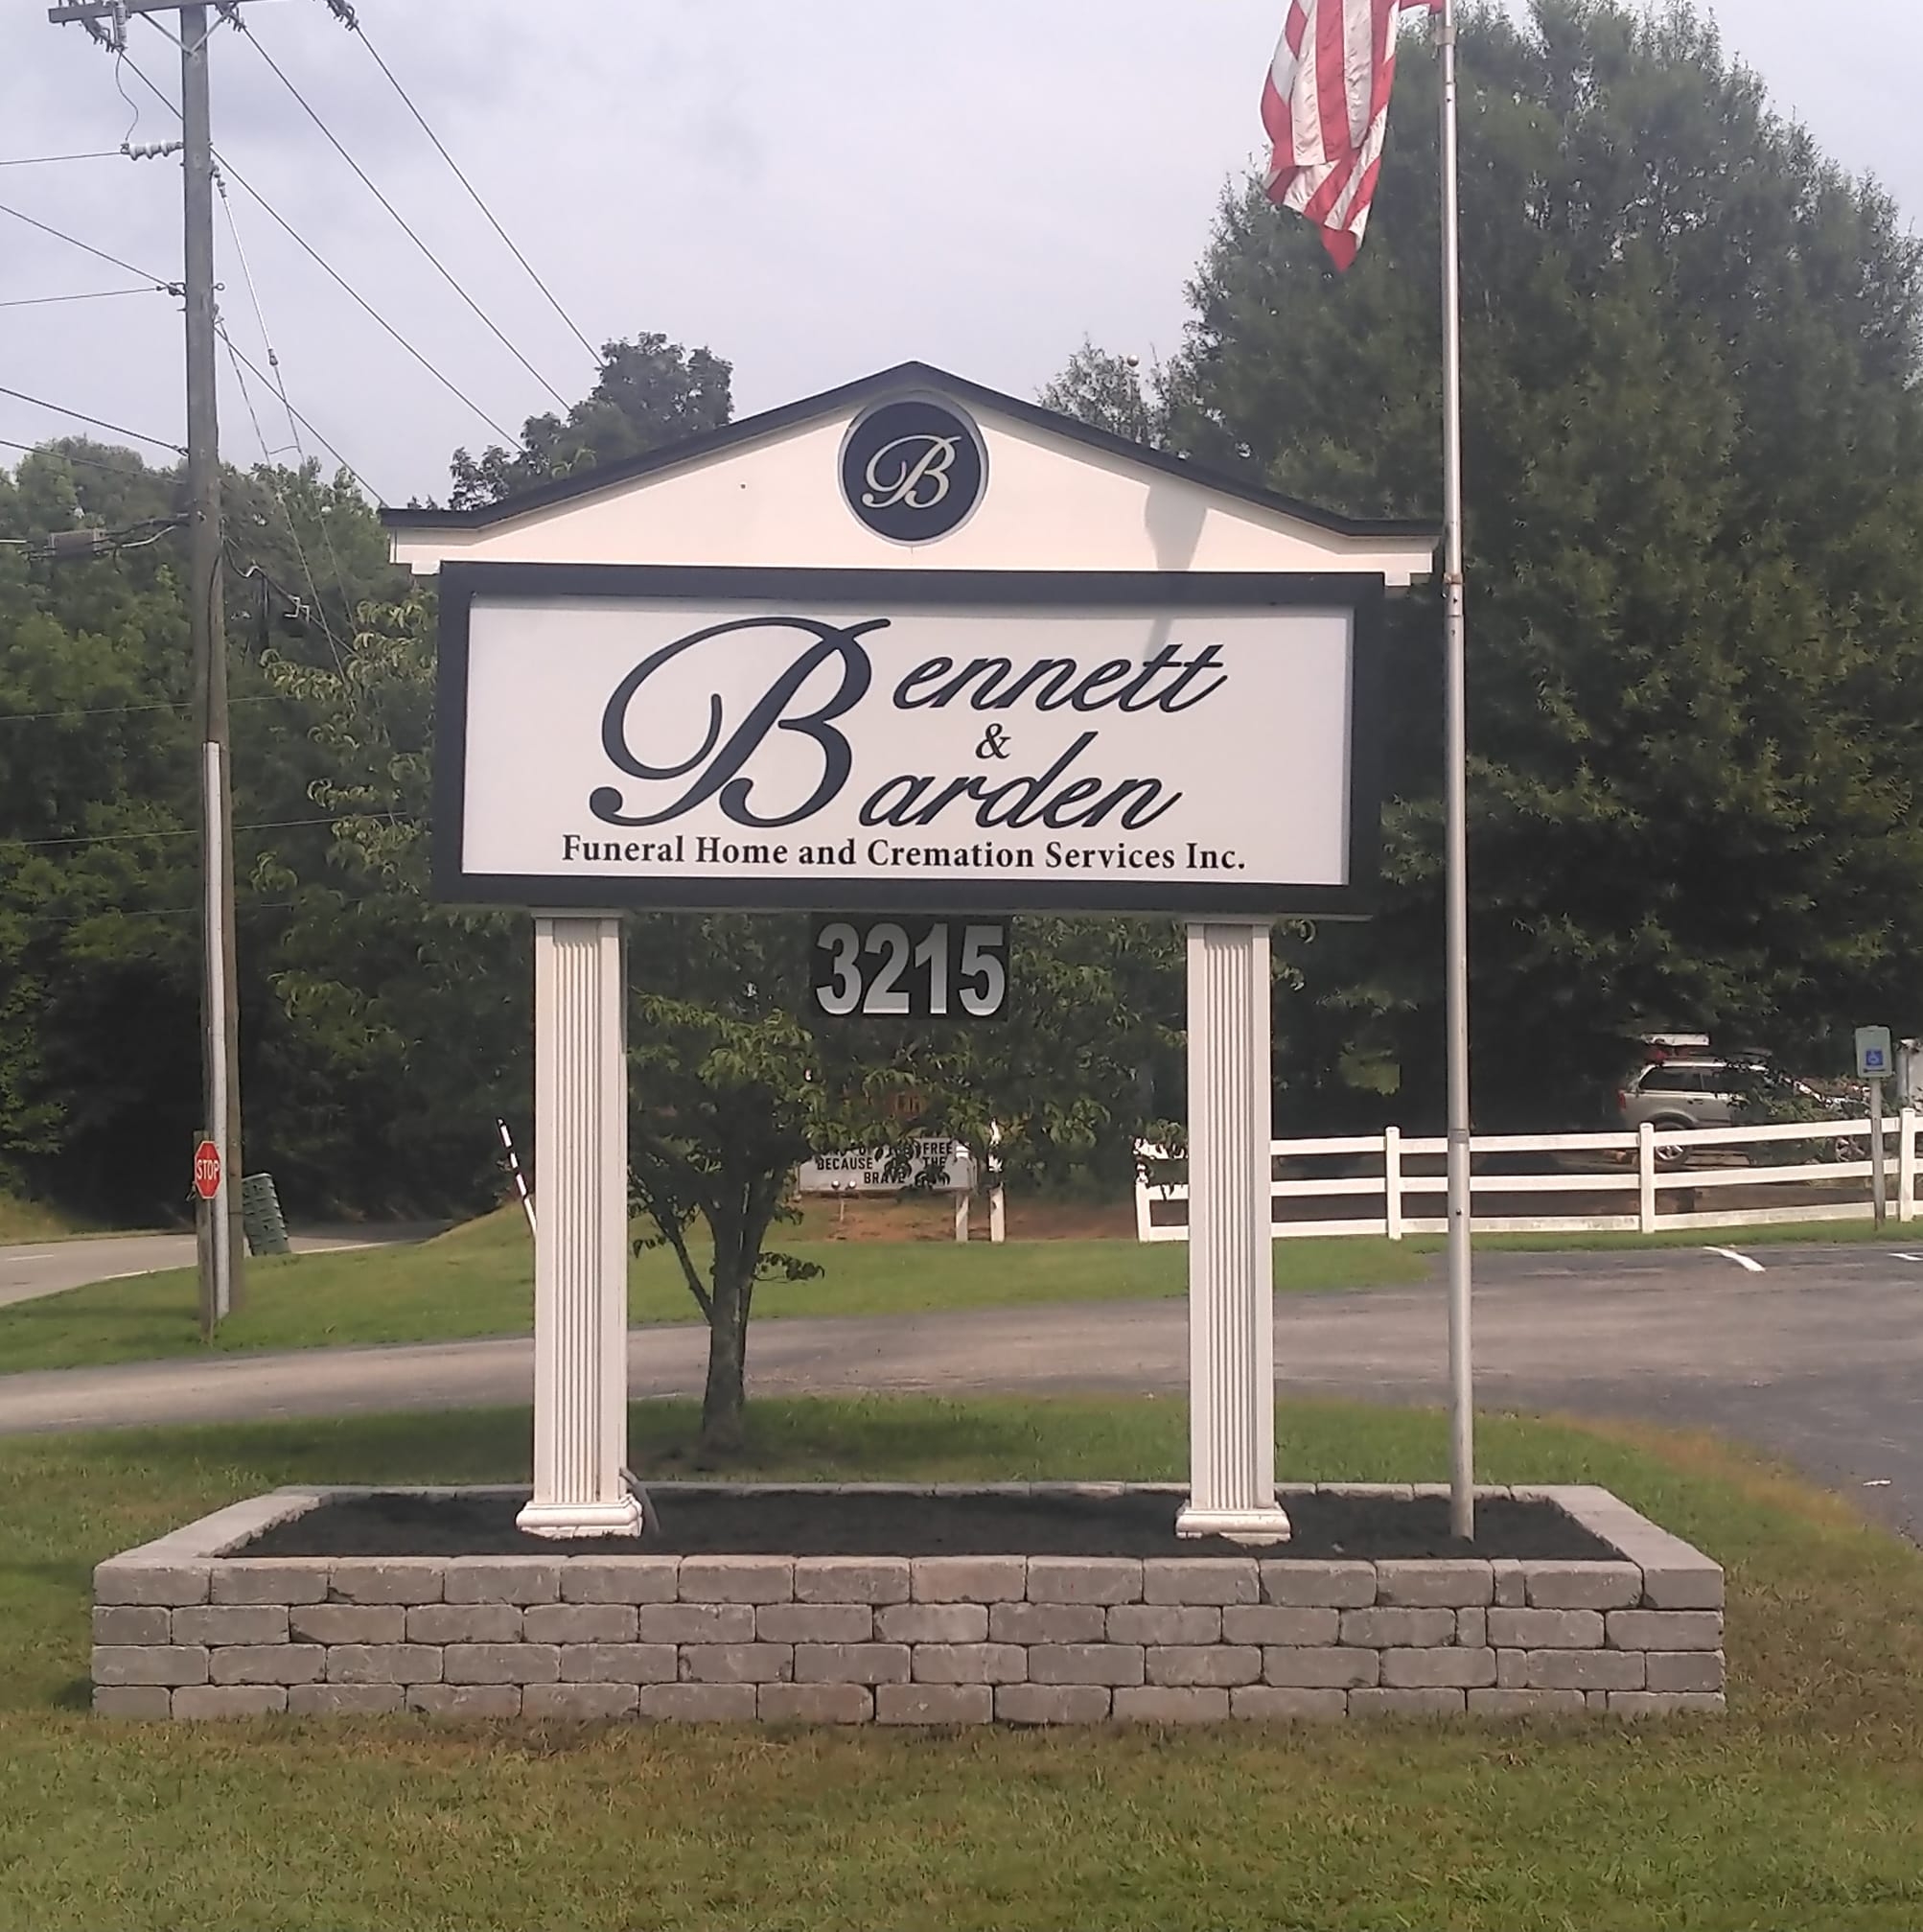 Bennett & Barden Funeral Home 3215 Anderson Hwy, Powhatan Virginia 23139